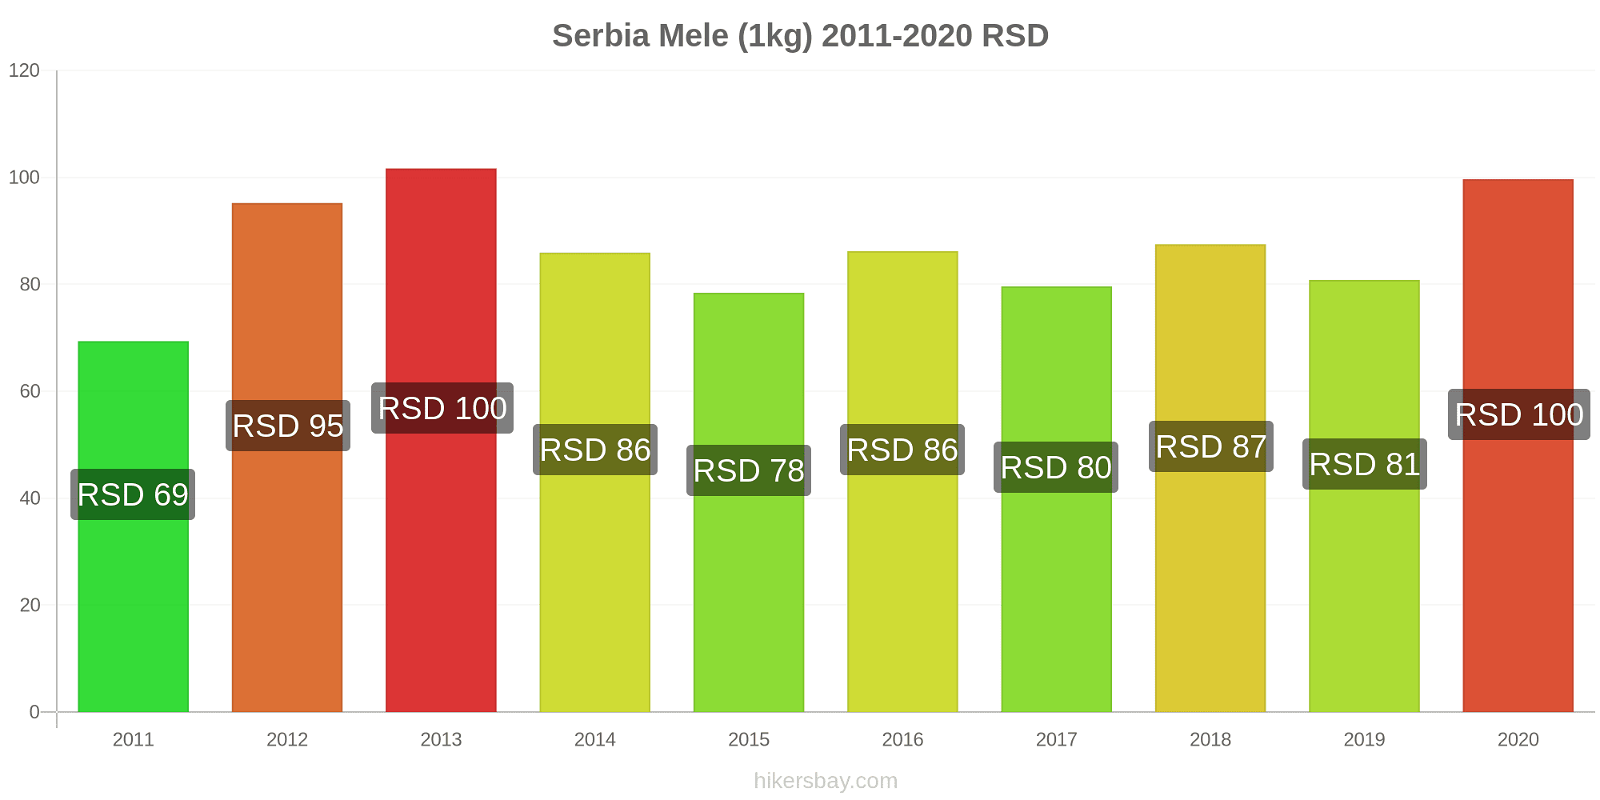 Serbia variazioni di prezzo Mele (1kg) hikersbay.com